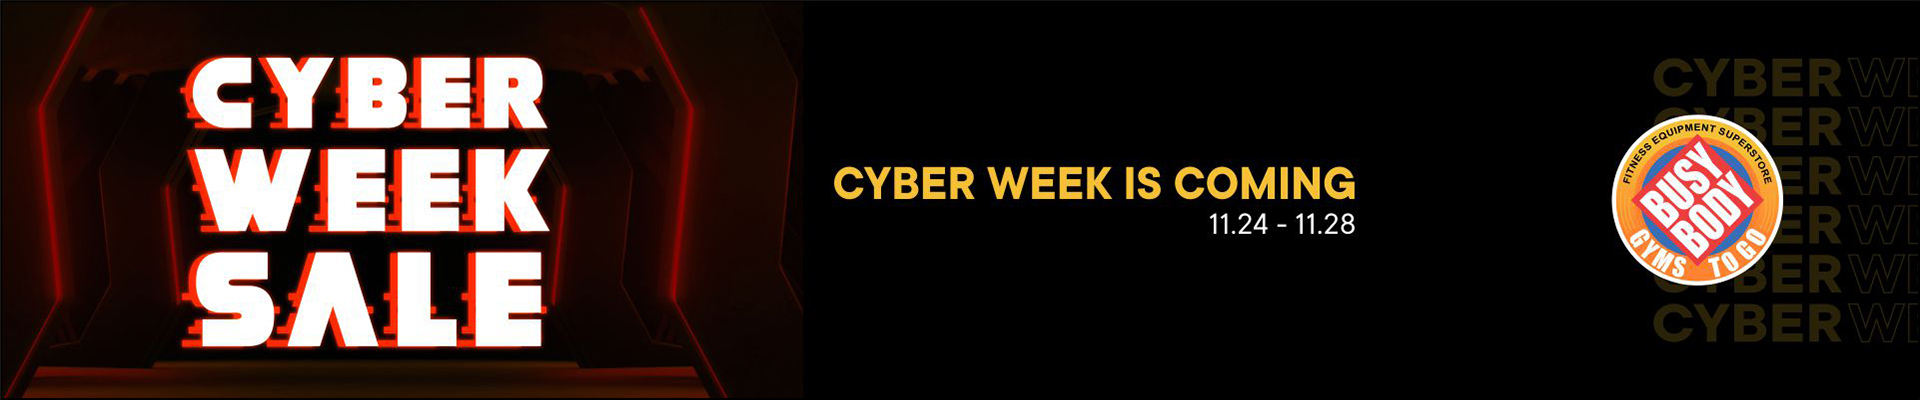 Cyber Week is Coming banner